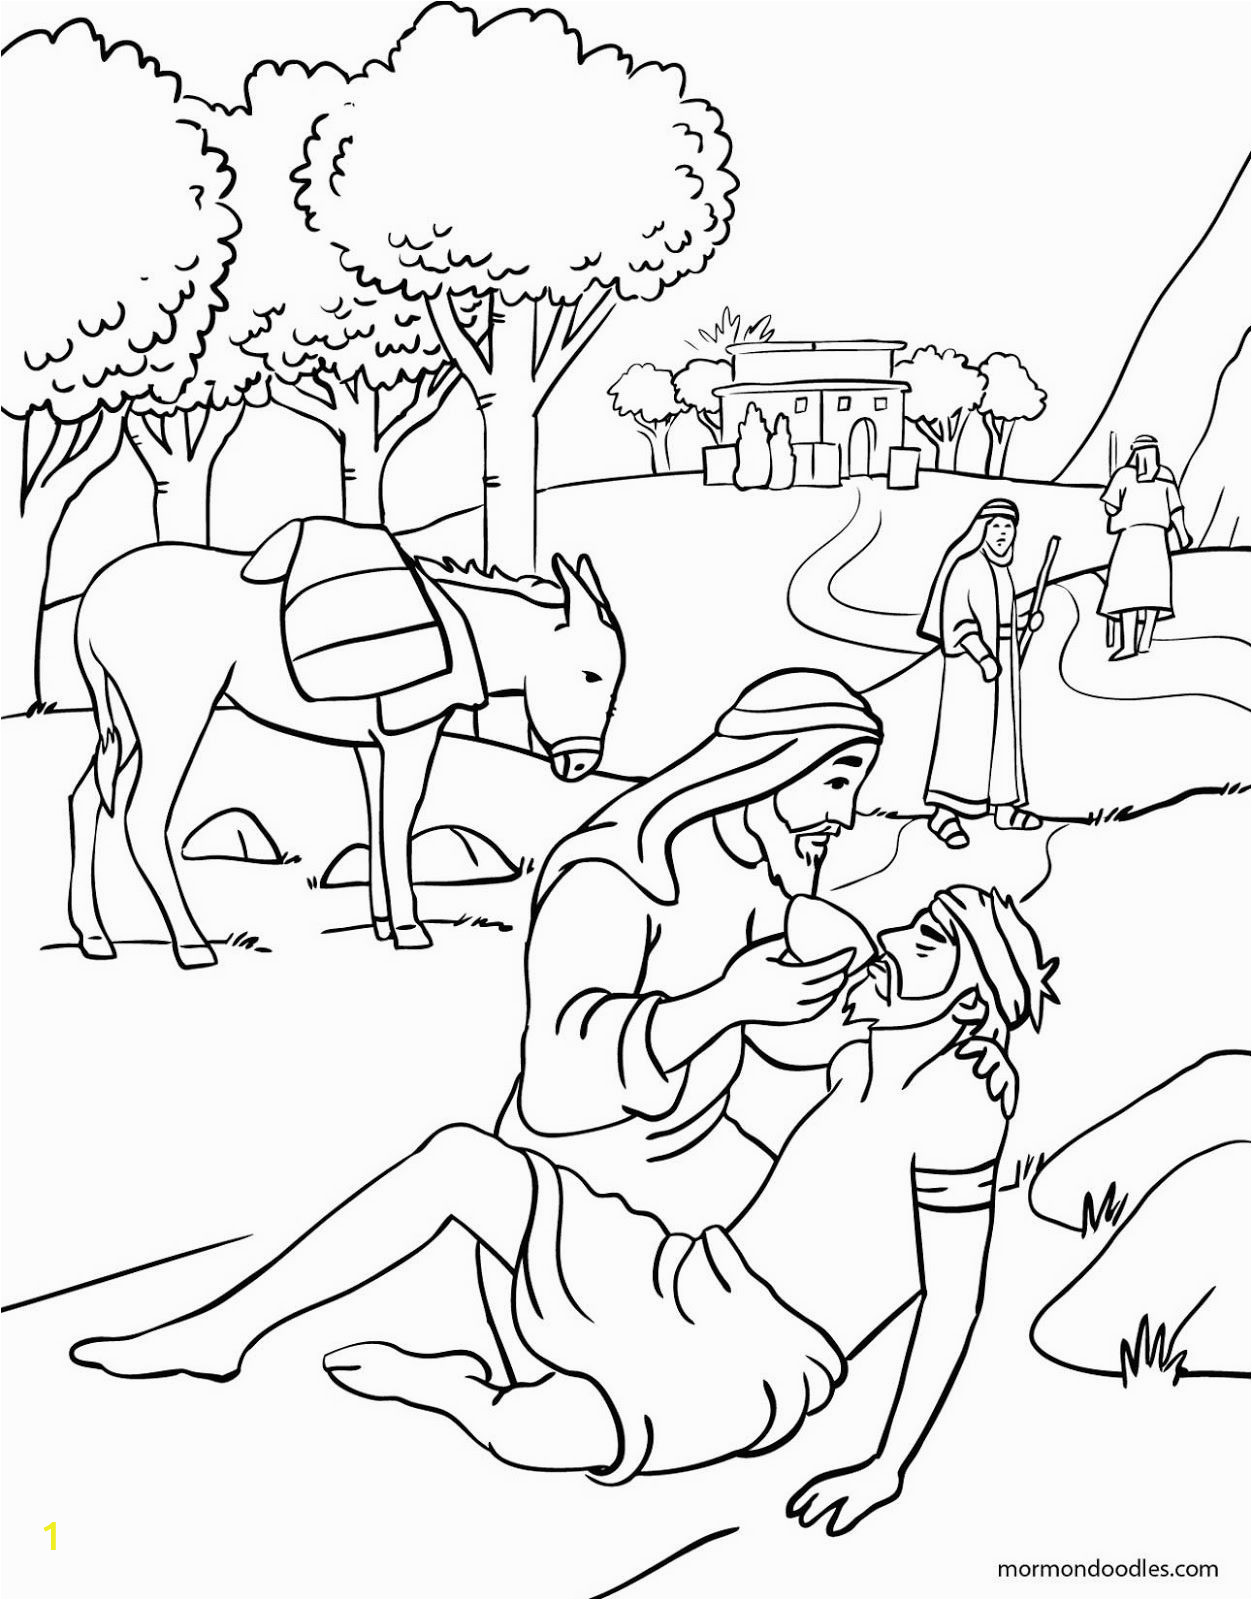 The Good Samaritan Coloring Pages Free Mormon Doodles the Good Samaritan Coloring Page